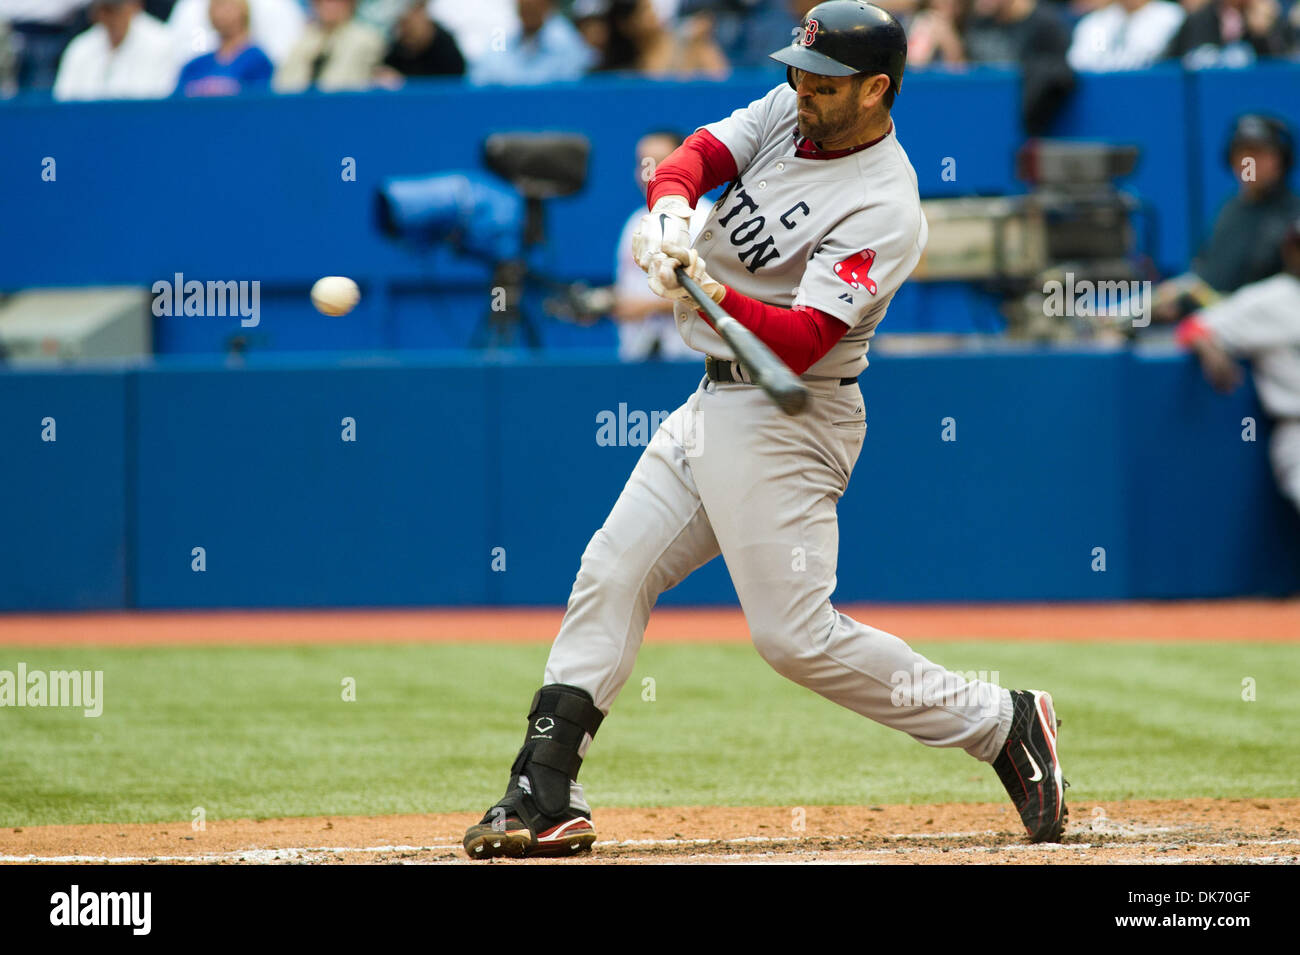 June 11, 2011 - Toronto, Ontario, Canada - Boston Red Sox Catcher